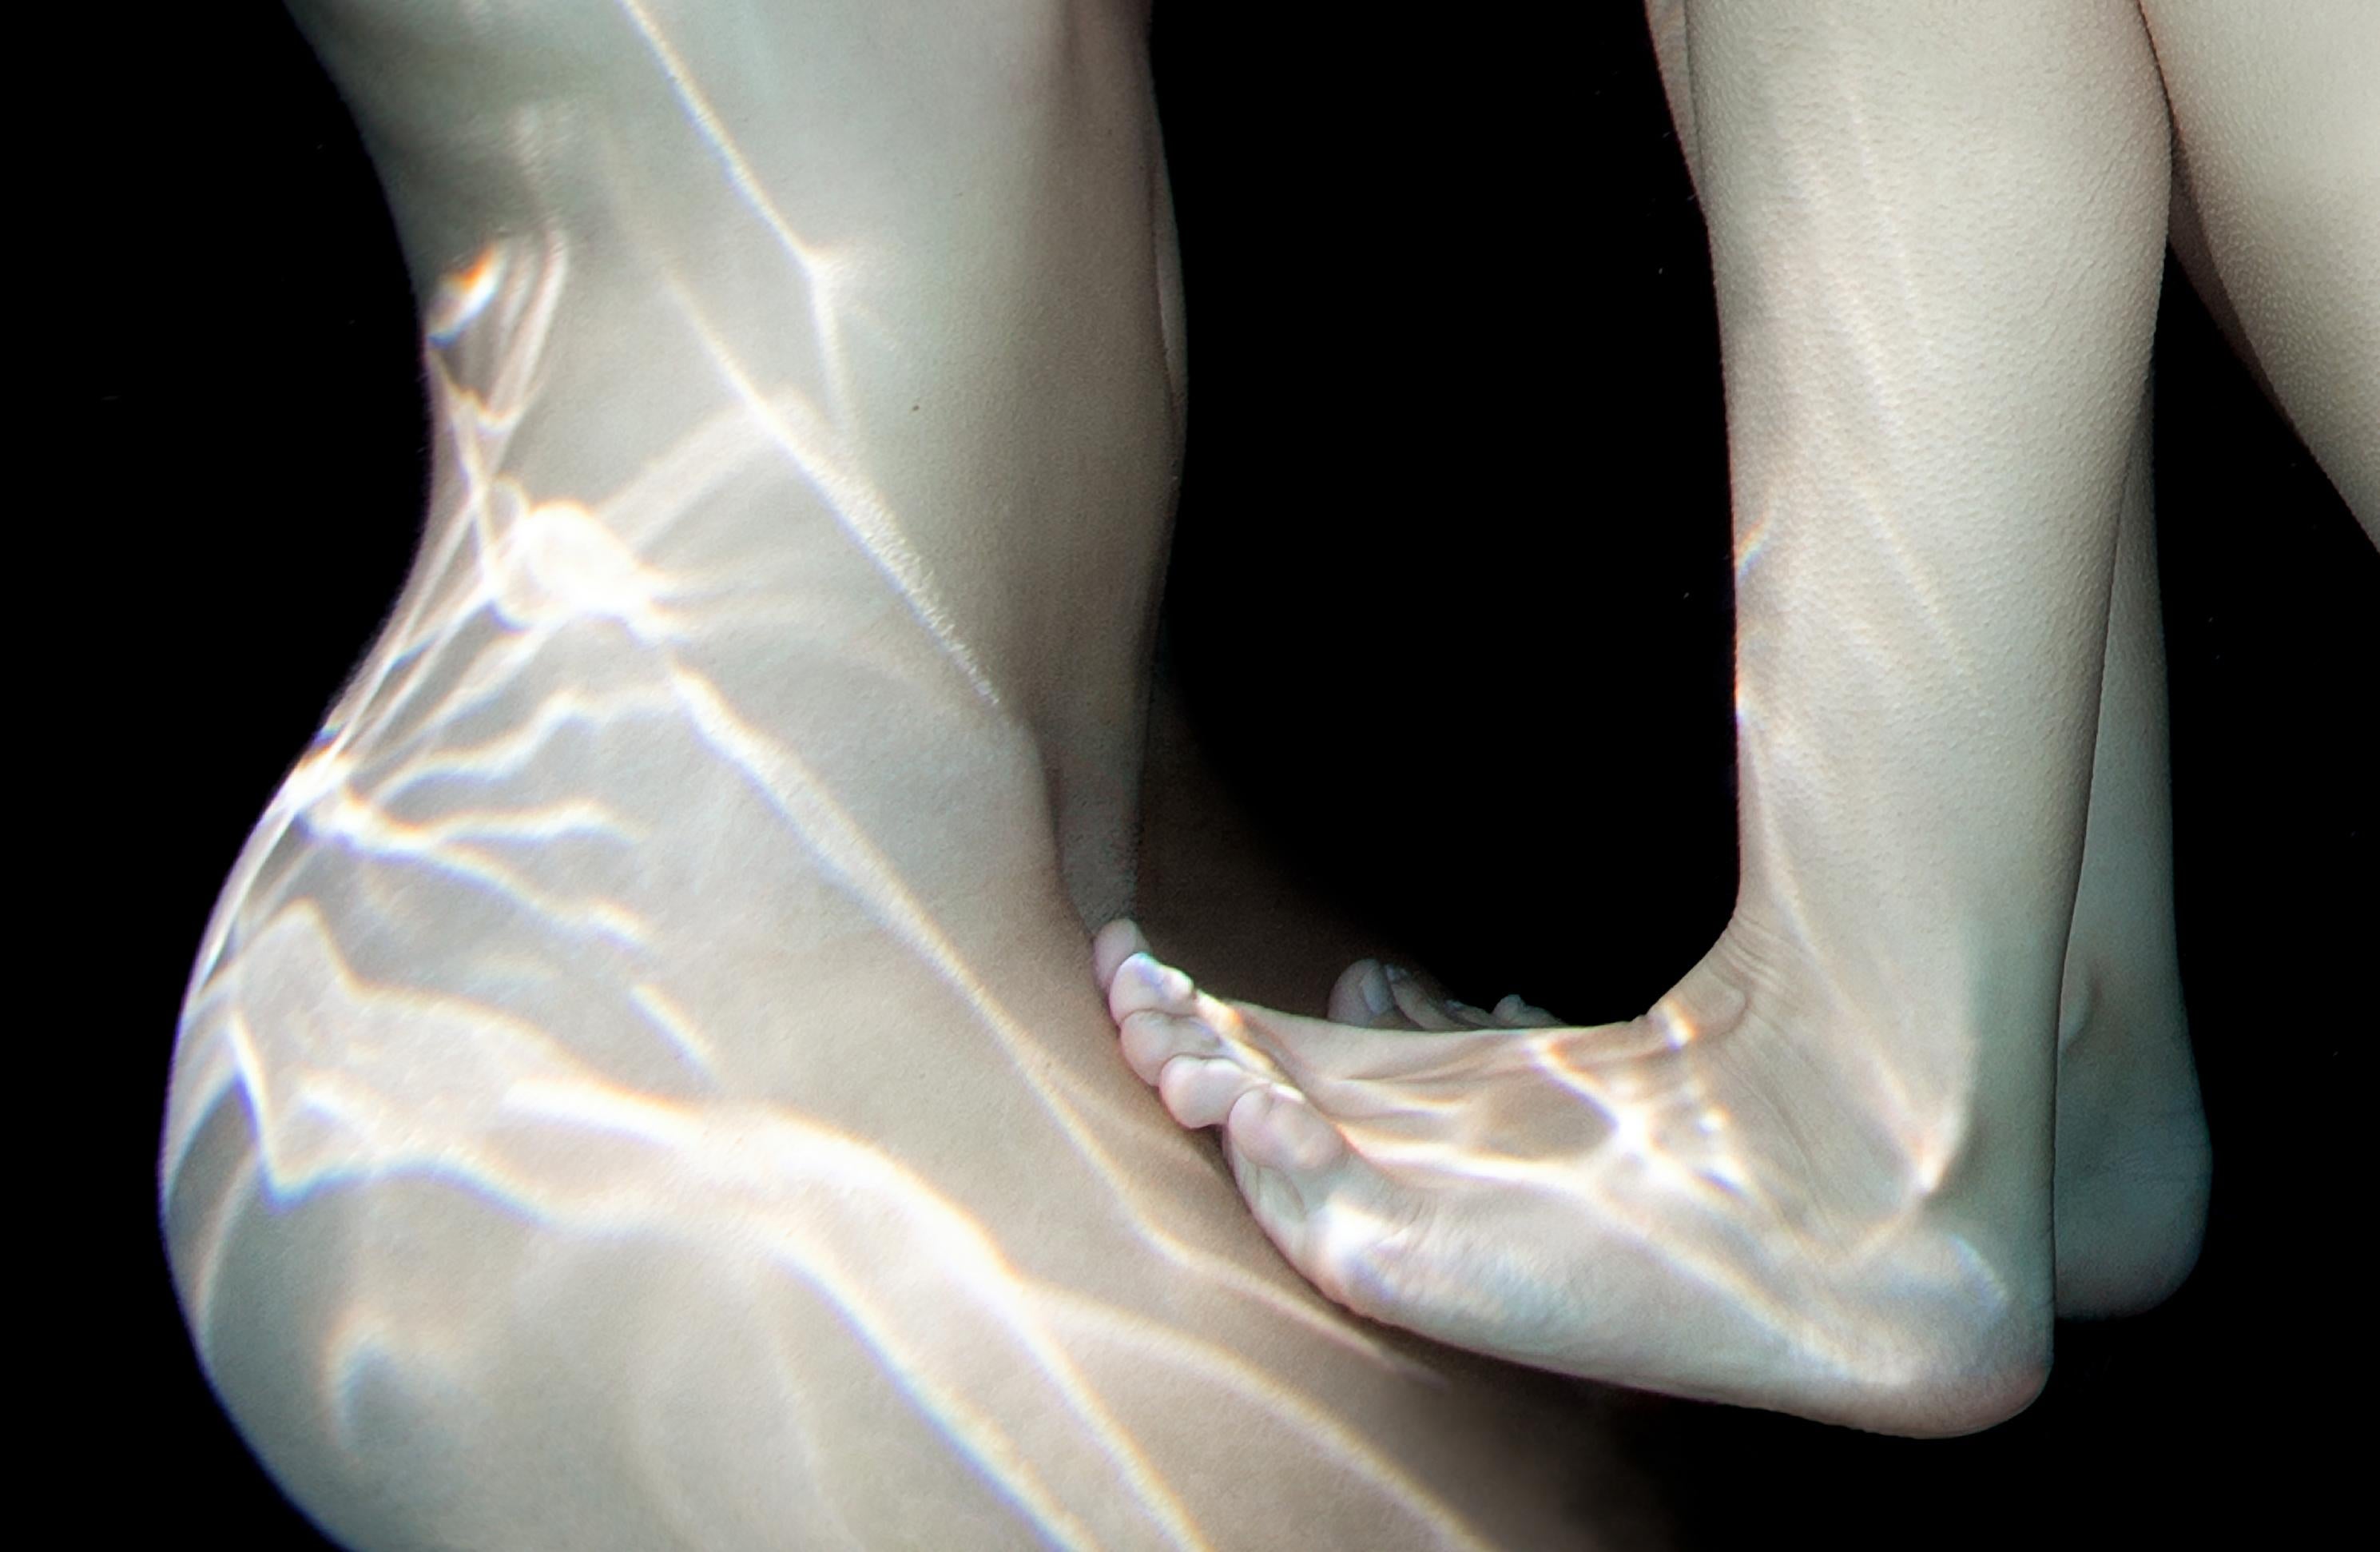 Porcelain  - underwater nude photograph - archival pigment print 43